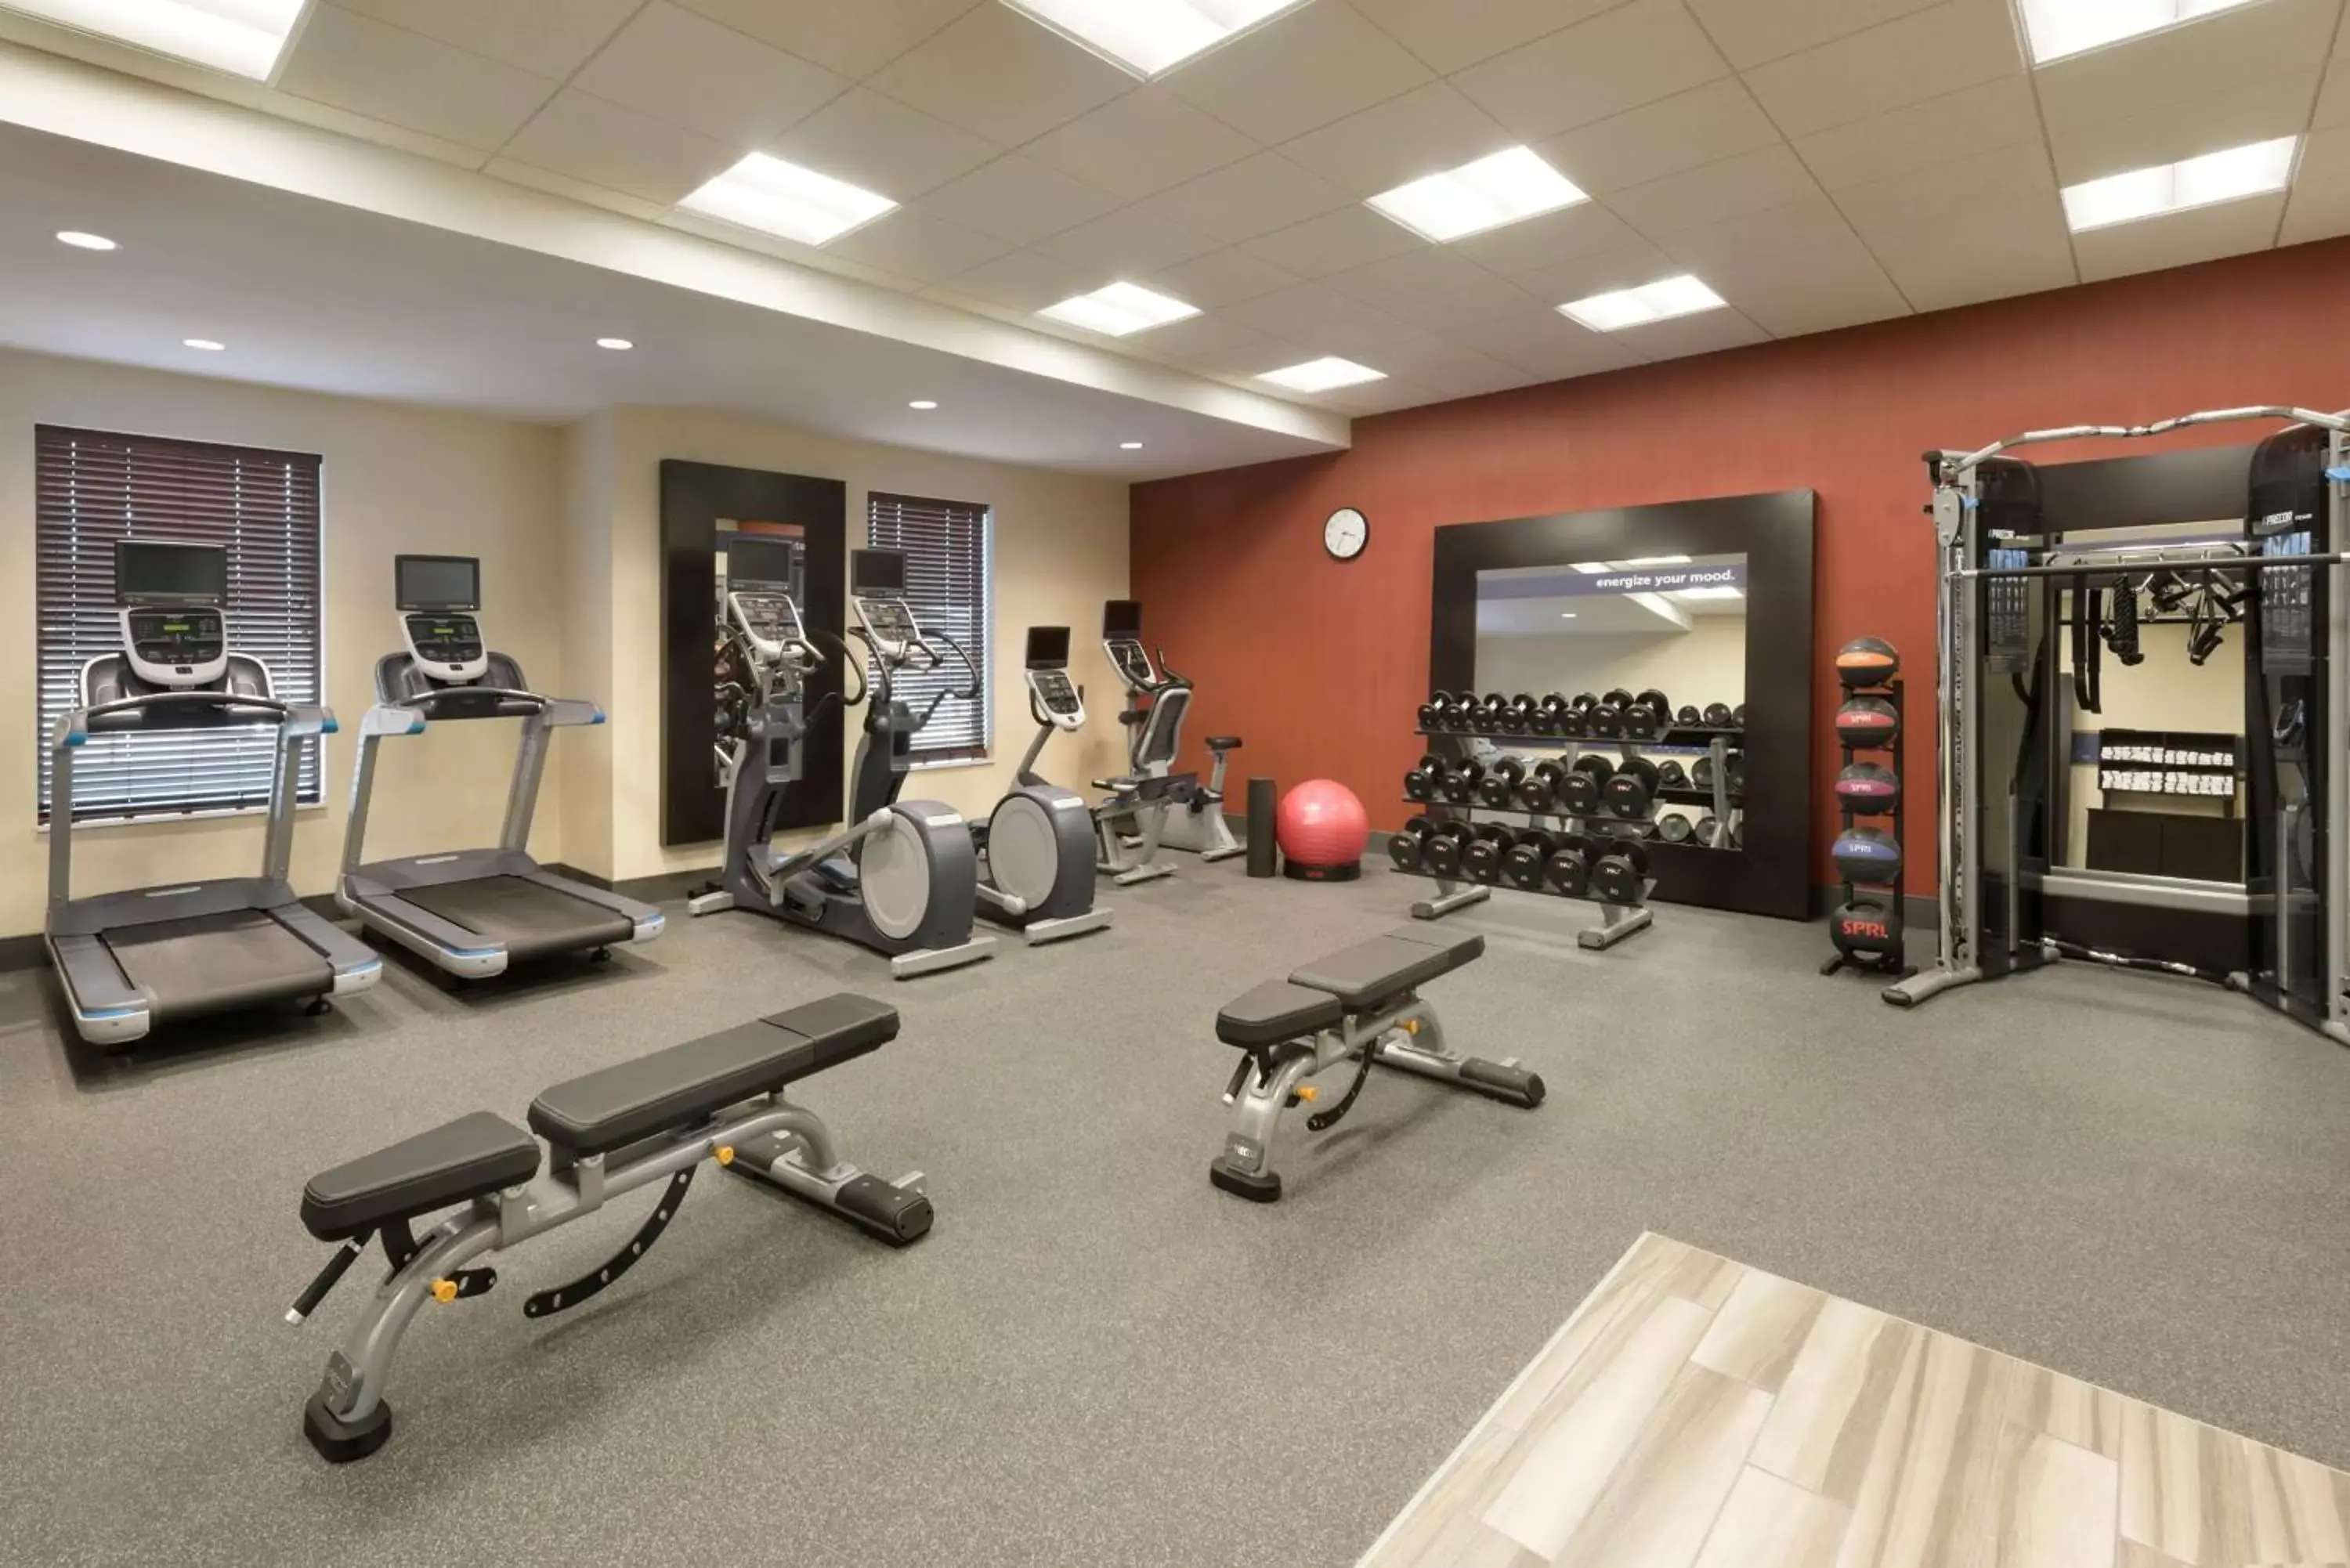 Fitness centre/facilities, Fitness Center/Facilities in Hampton Inn by Hilton Spring Hill, TN